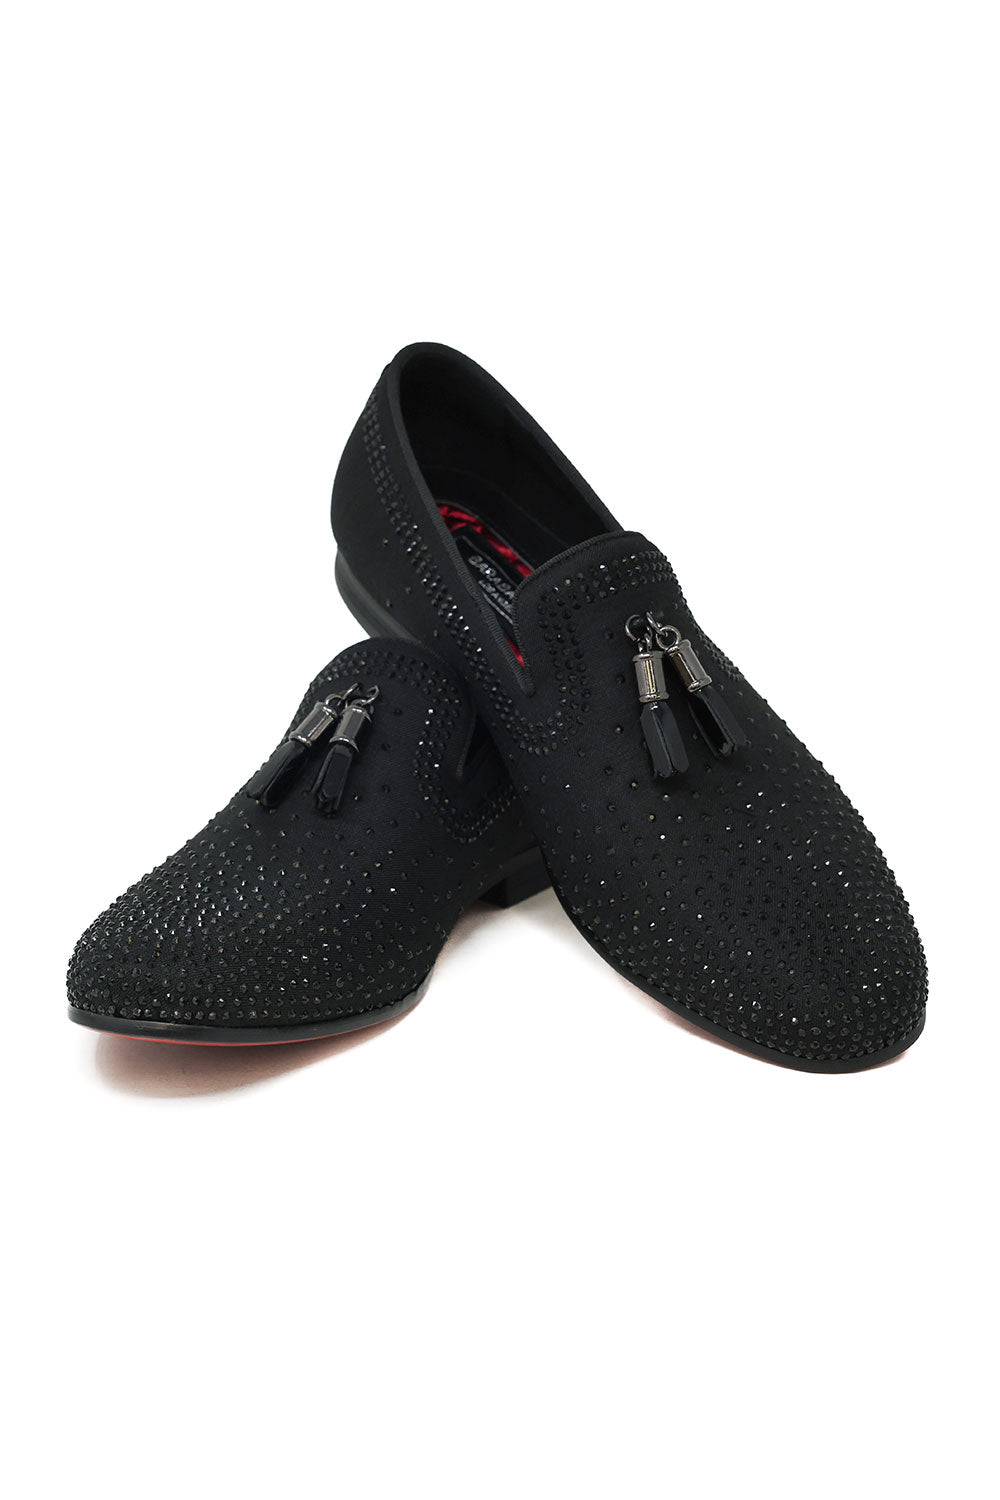 Barabas Men's Rhinestone Slip On Tassel Loafer Dress Shoes 2ESH3 Black